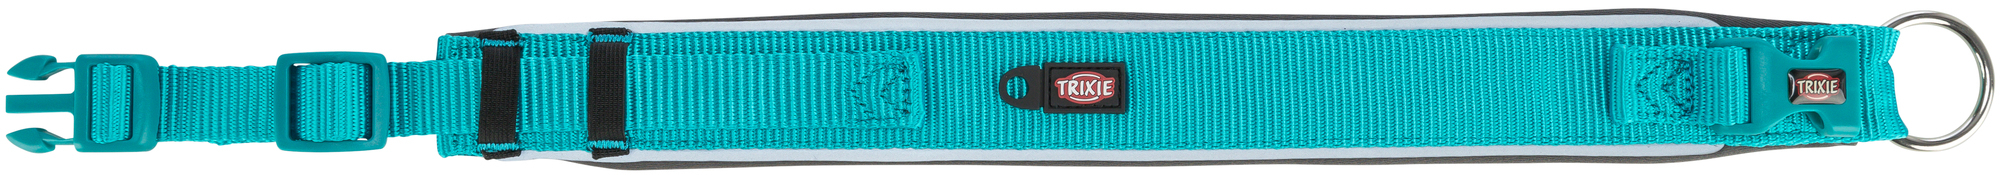 Trixie Premium Halsband extra large - Ozean/Graphitgrau